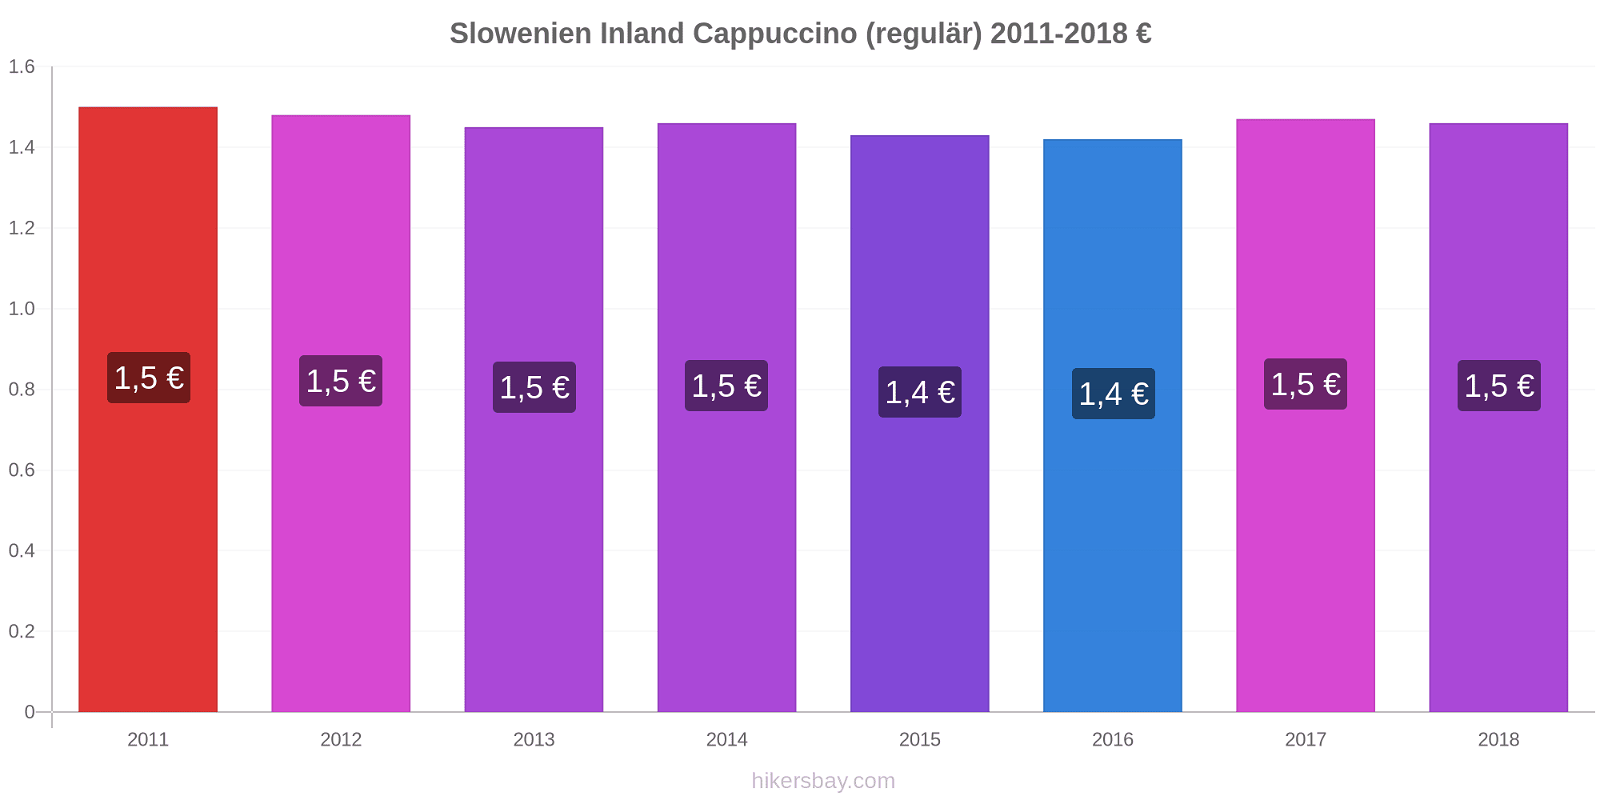 Slowenien Inland Preisänderungen Cappuccino (regulär) hikersbay.com